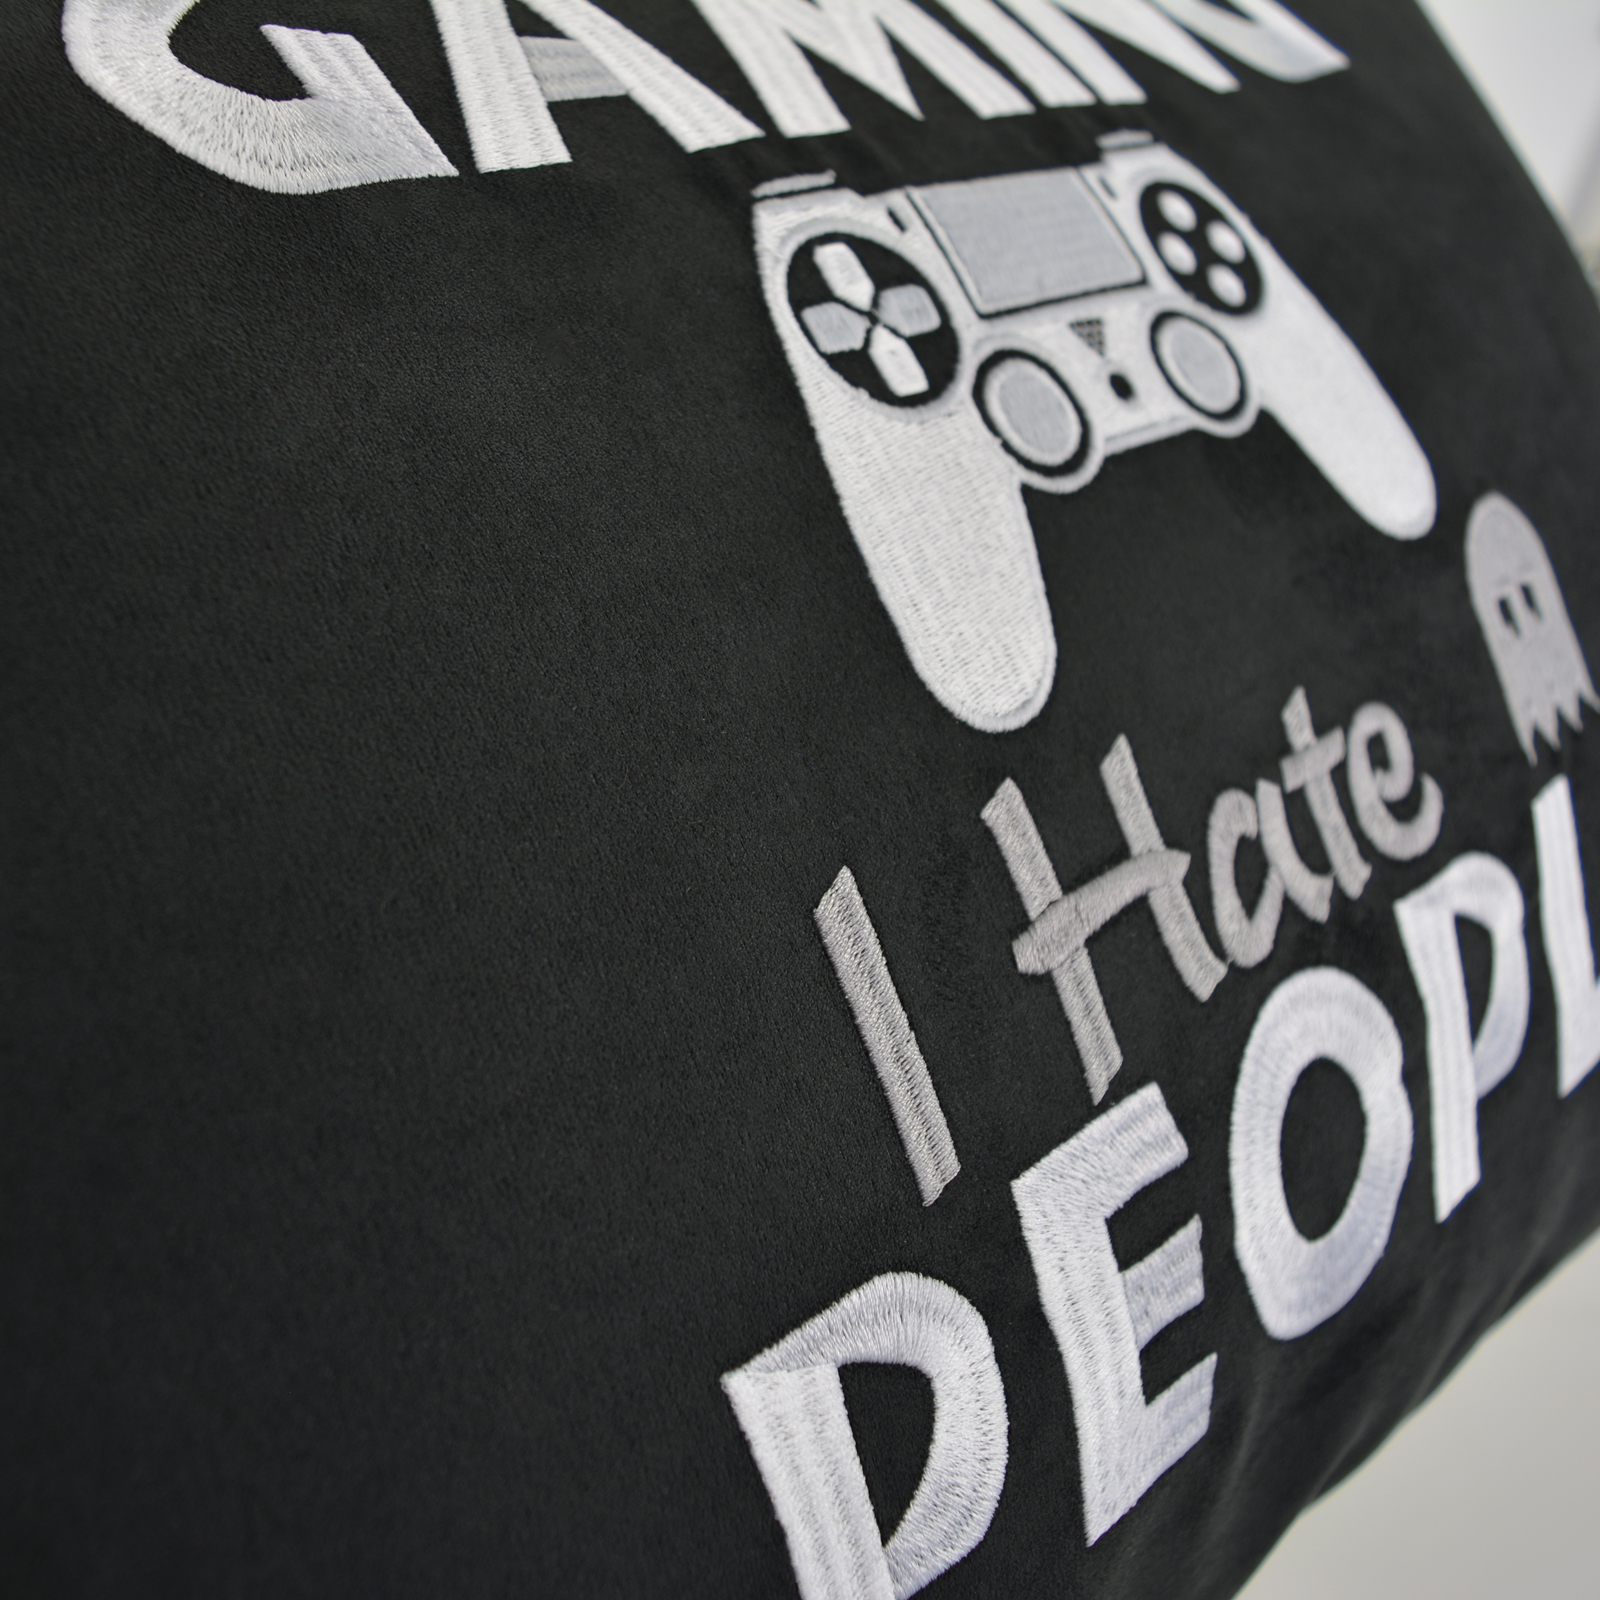 I love gaming - I hate people